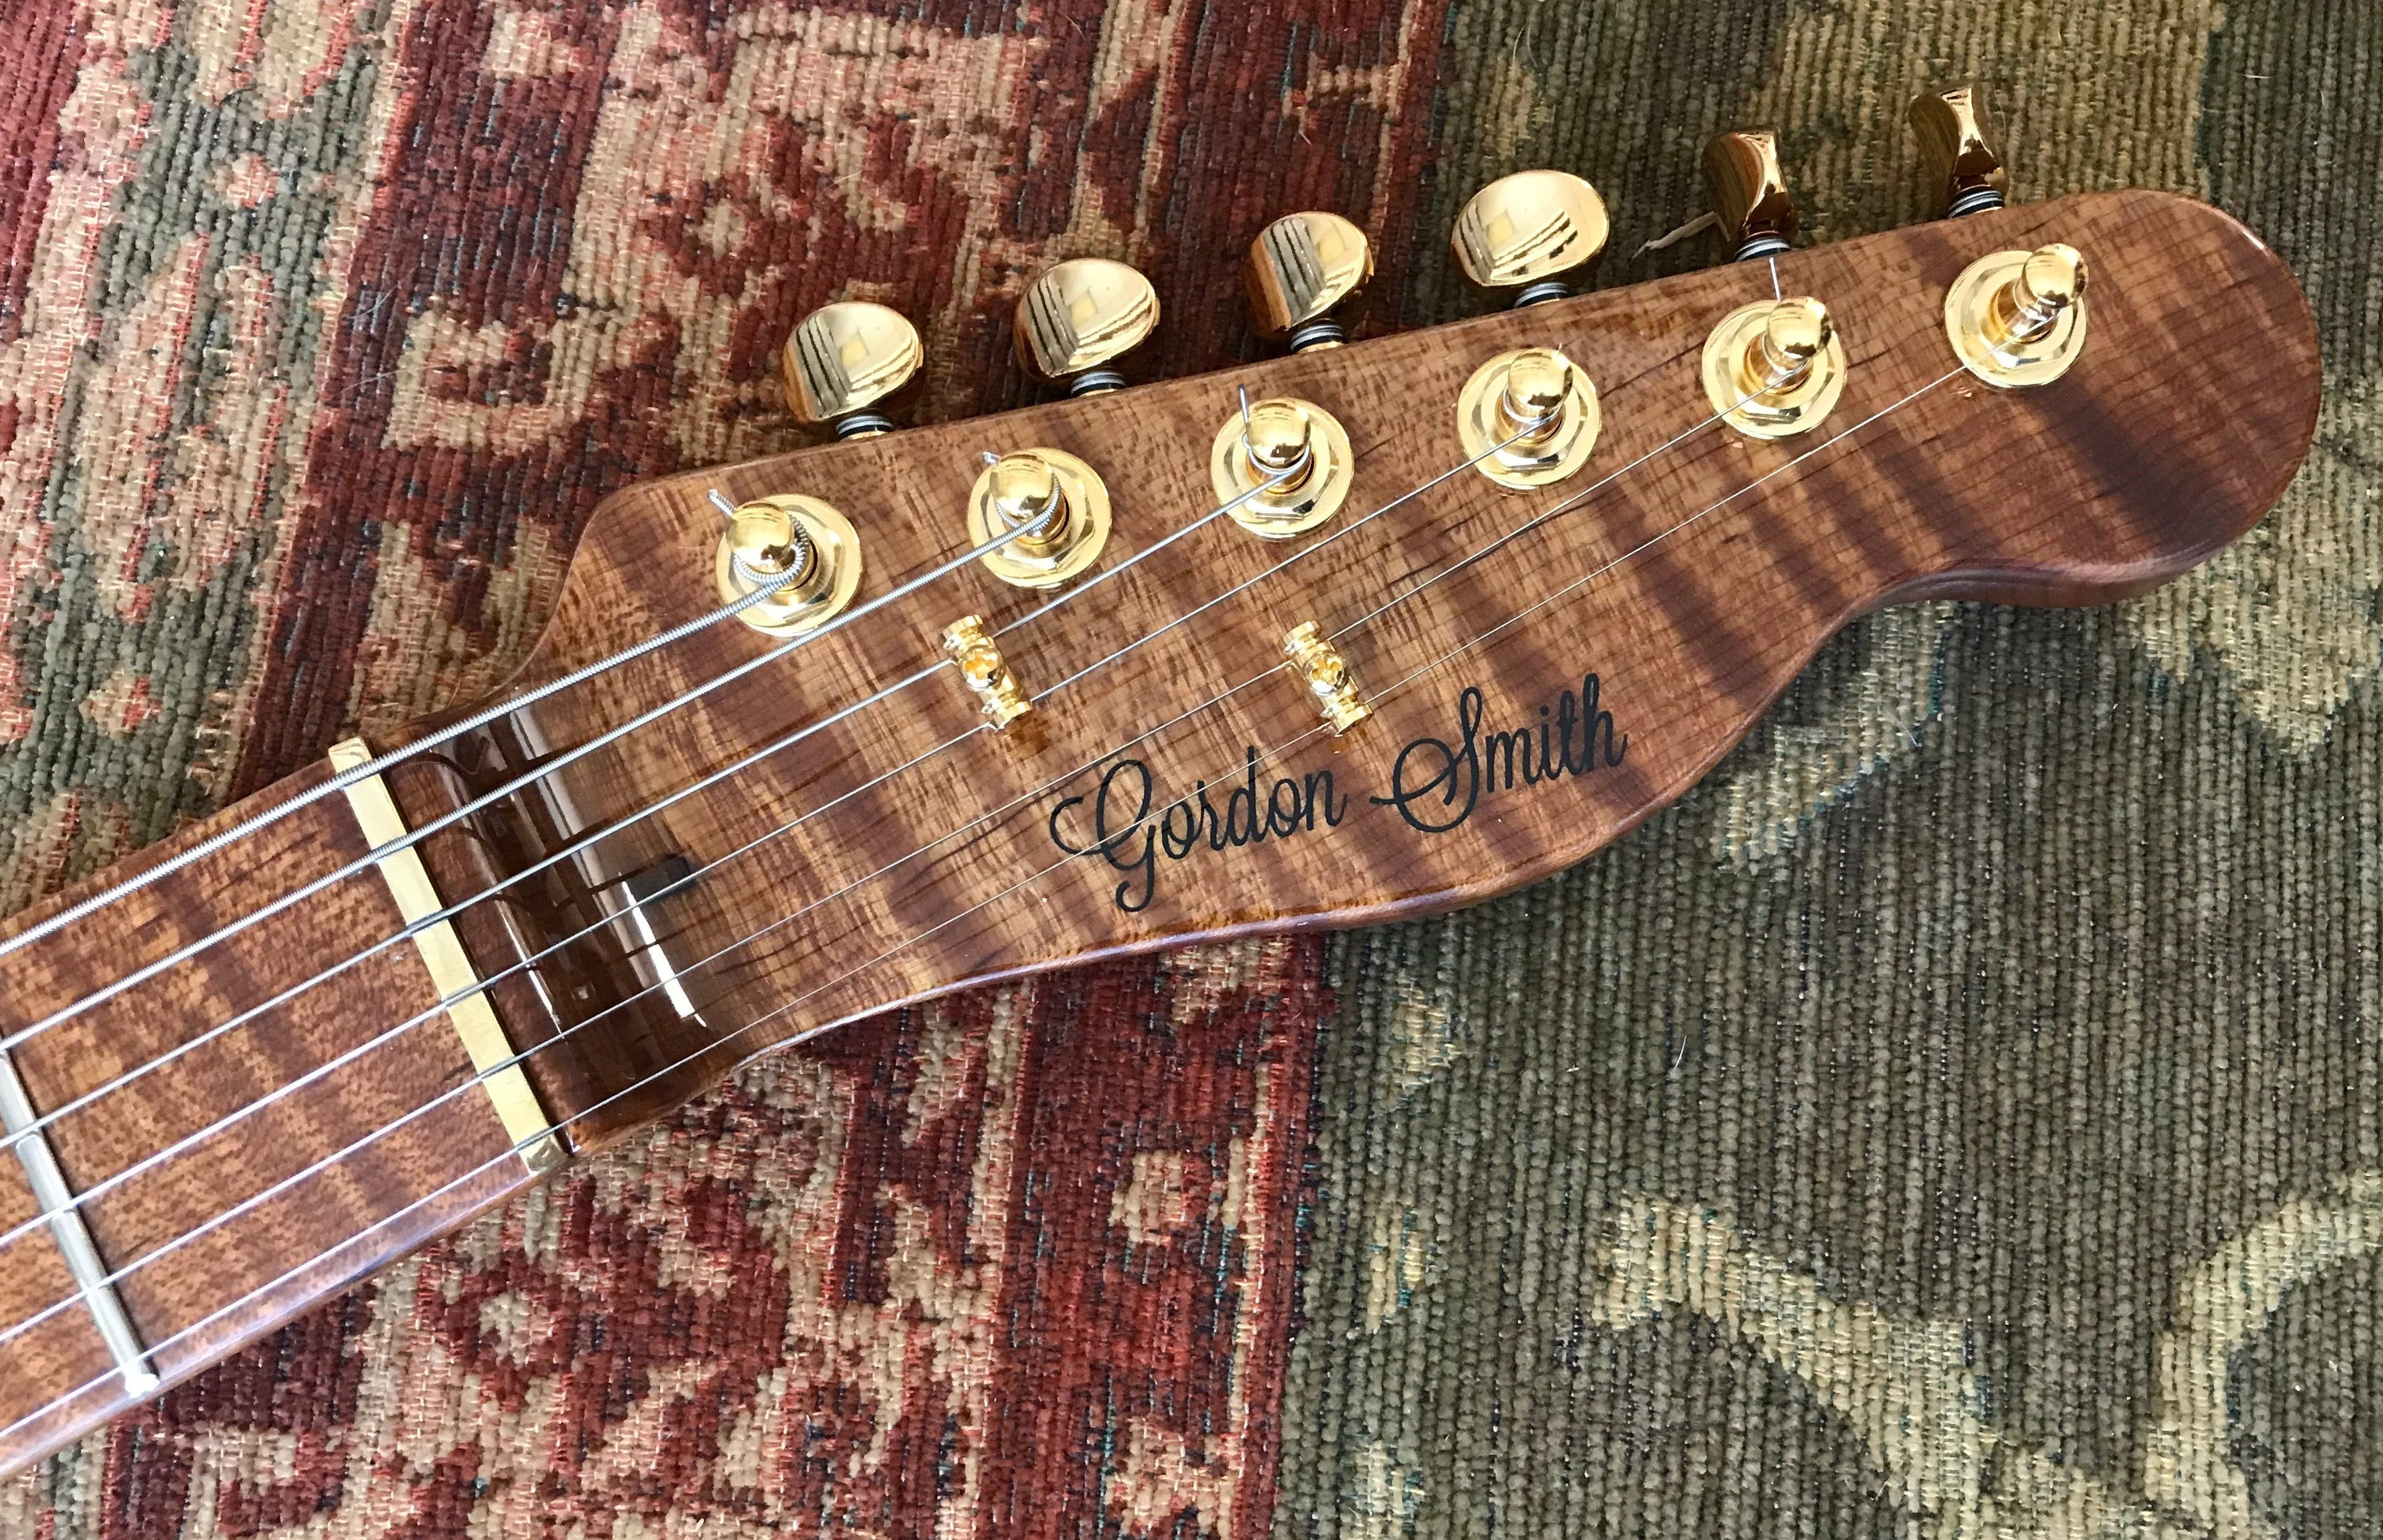 Gordon Smith Classic T Semi Hollow Custom, Electric Guitar for sale at Richards Guitars.